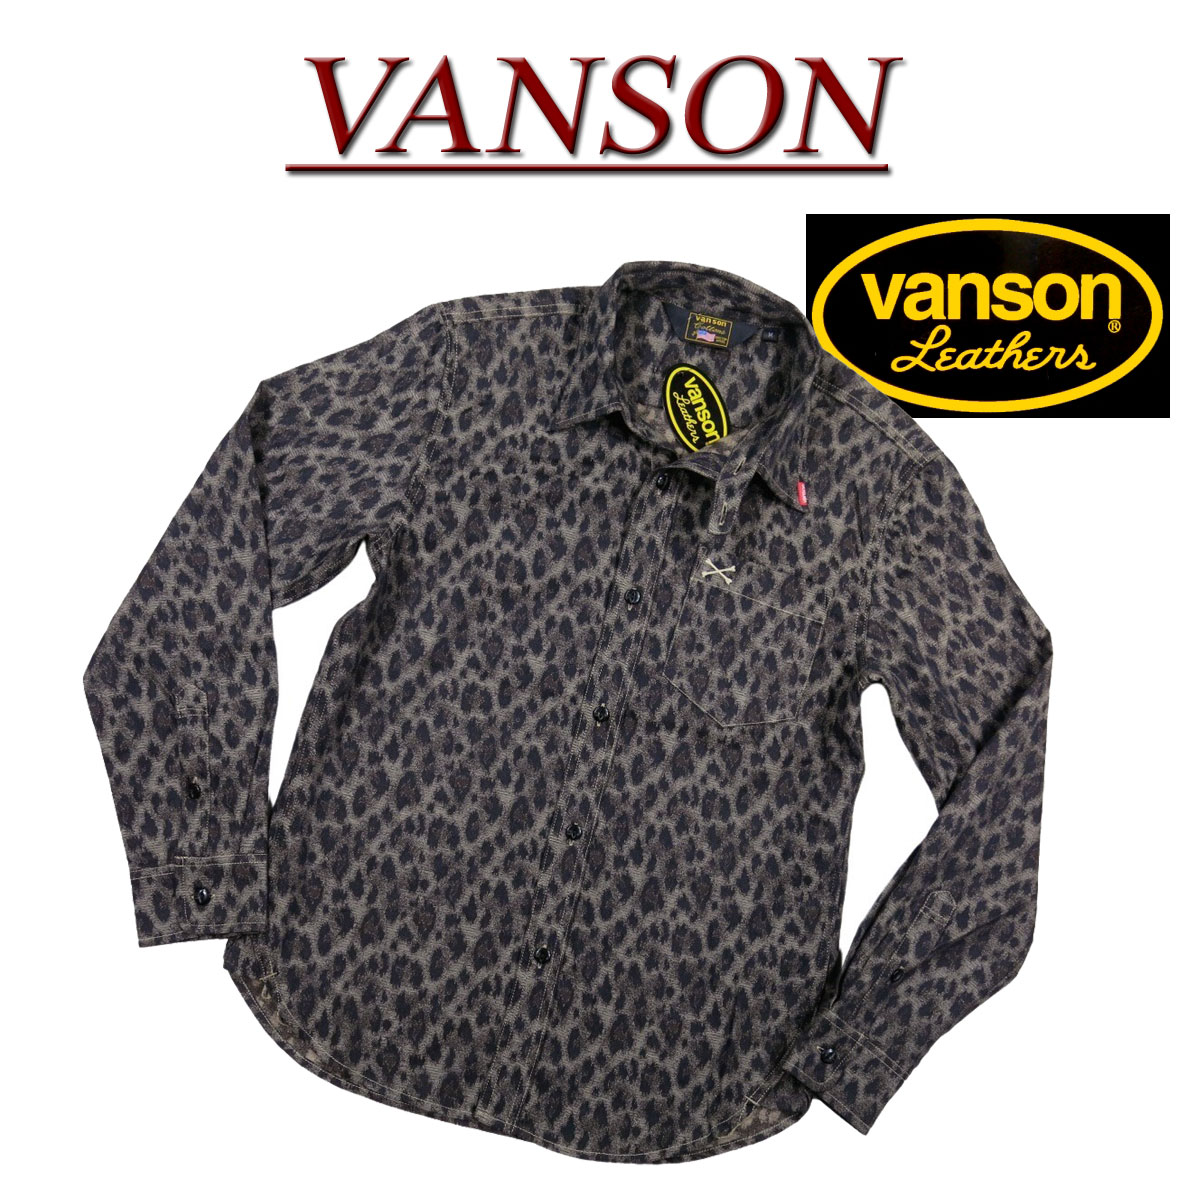  nc423 新品 VANSON クロスボーン刺繍 ヒョウ柄 長袖 ワークシャツ NVSL-803 メンズ バンソン CROSSBONE LEOPARD LONG SLEEVES WORK SHIRT レオパード ヴァンソン 